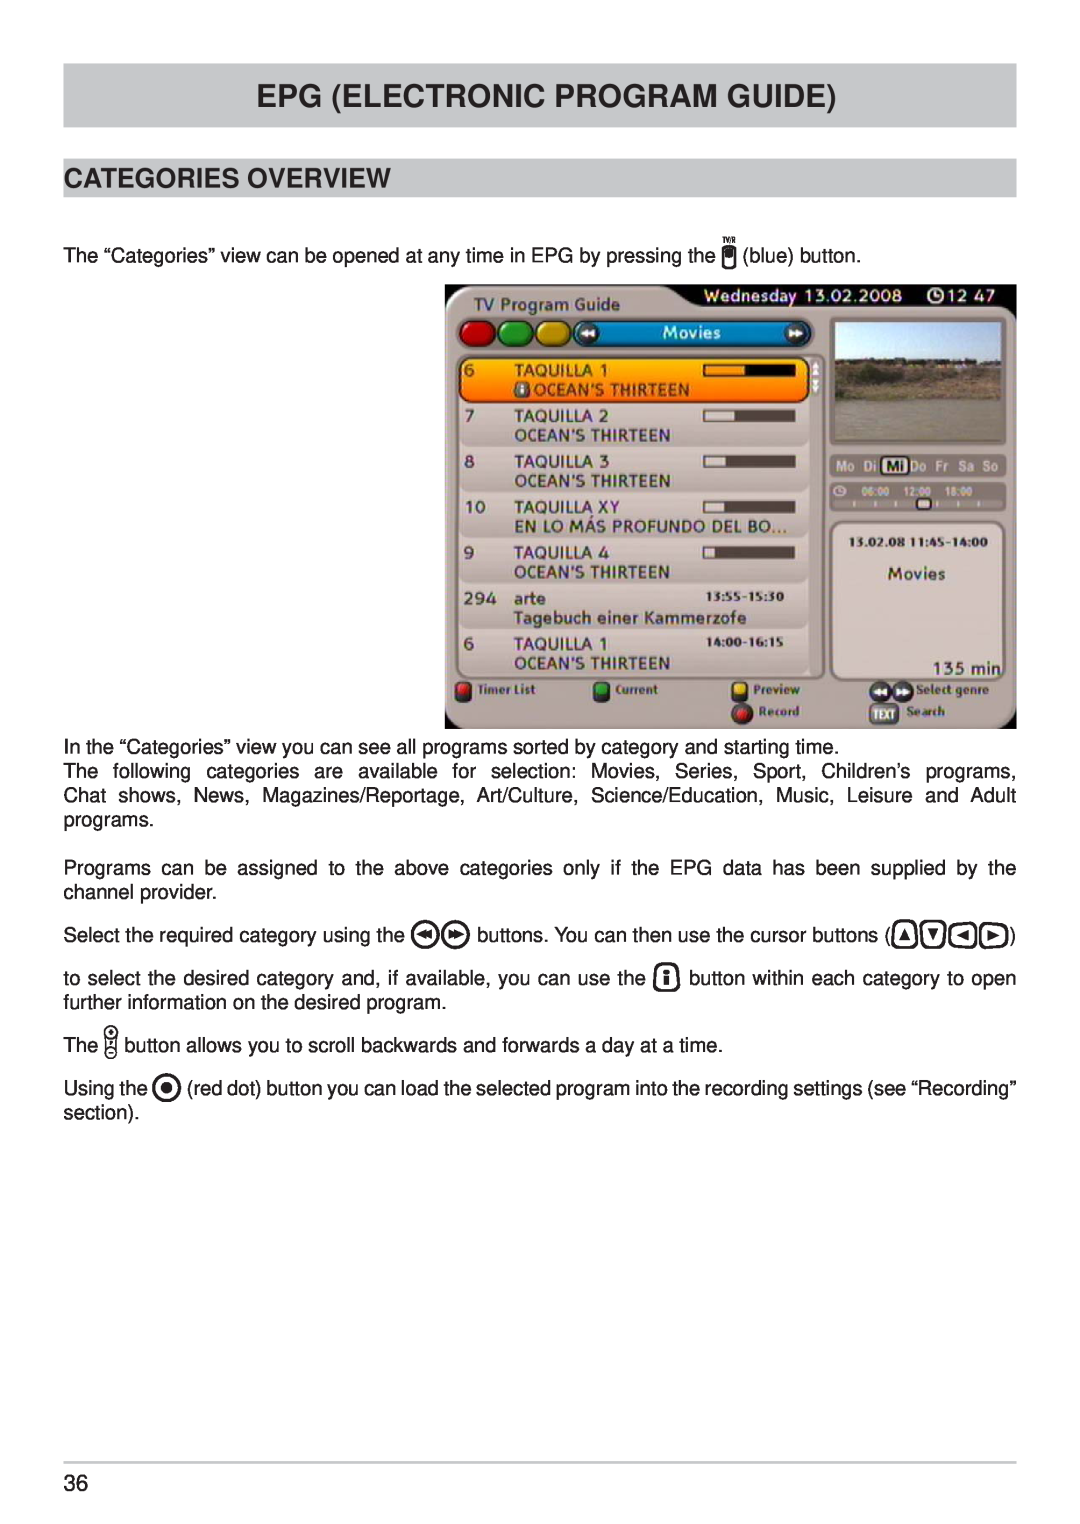 Kathrein UFS 790sw, UFS 790si manual Categories Overview, Epg Electronic Program Guide 